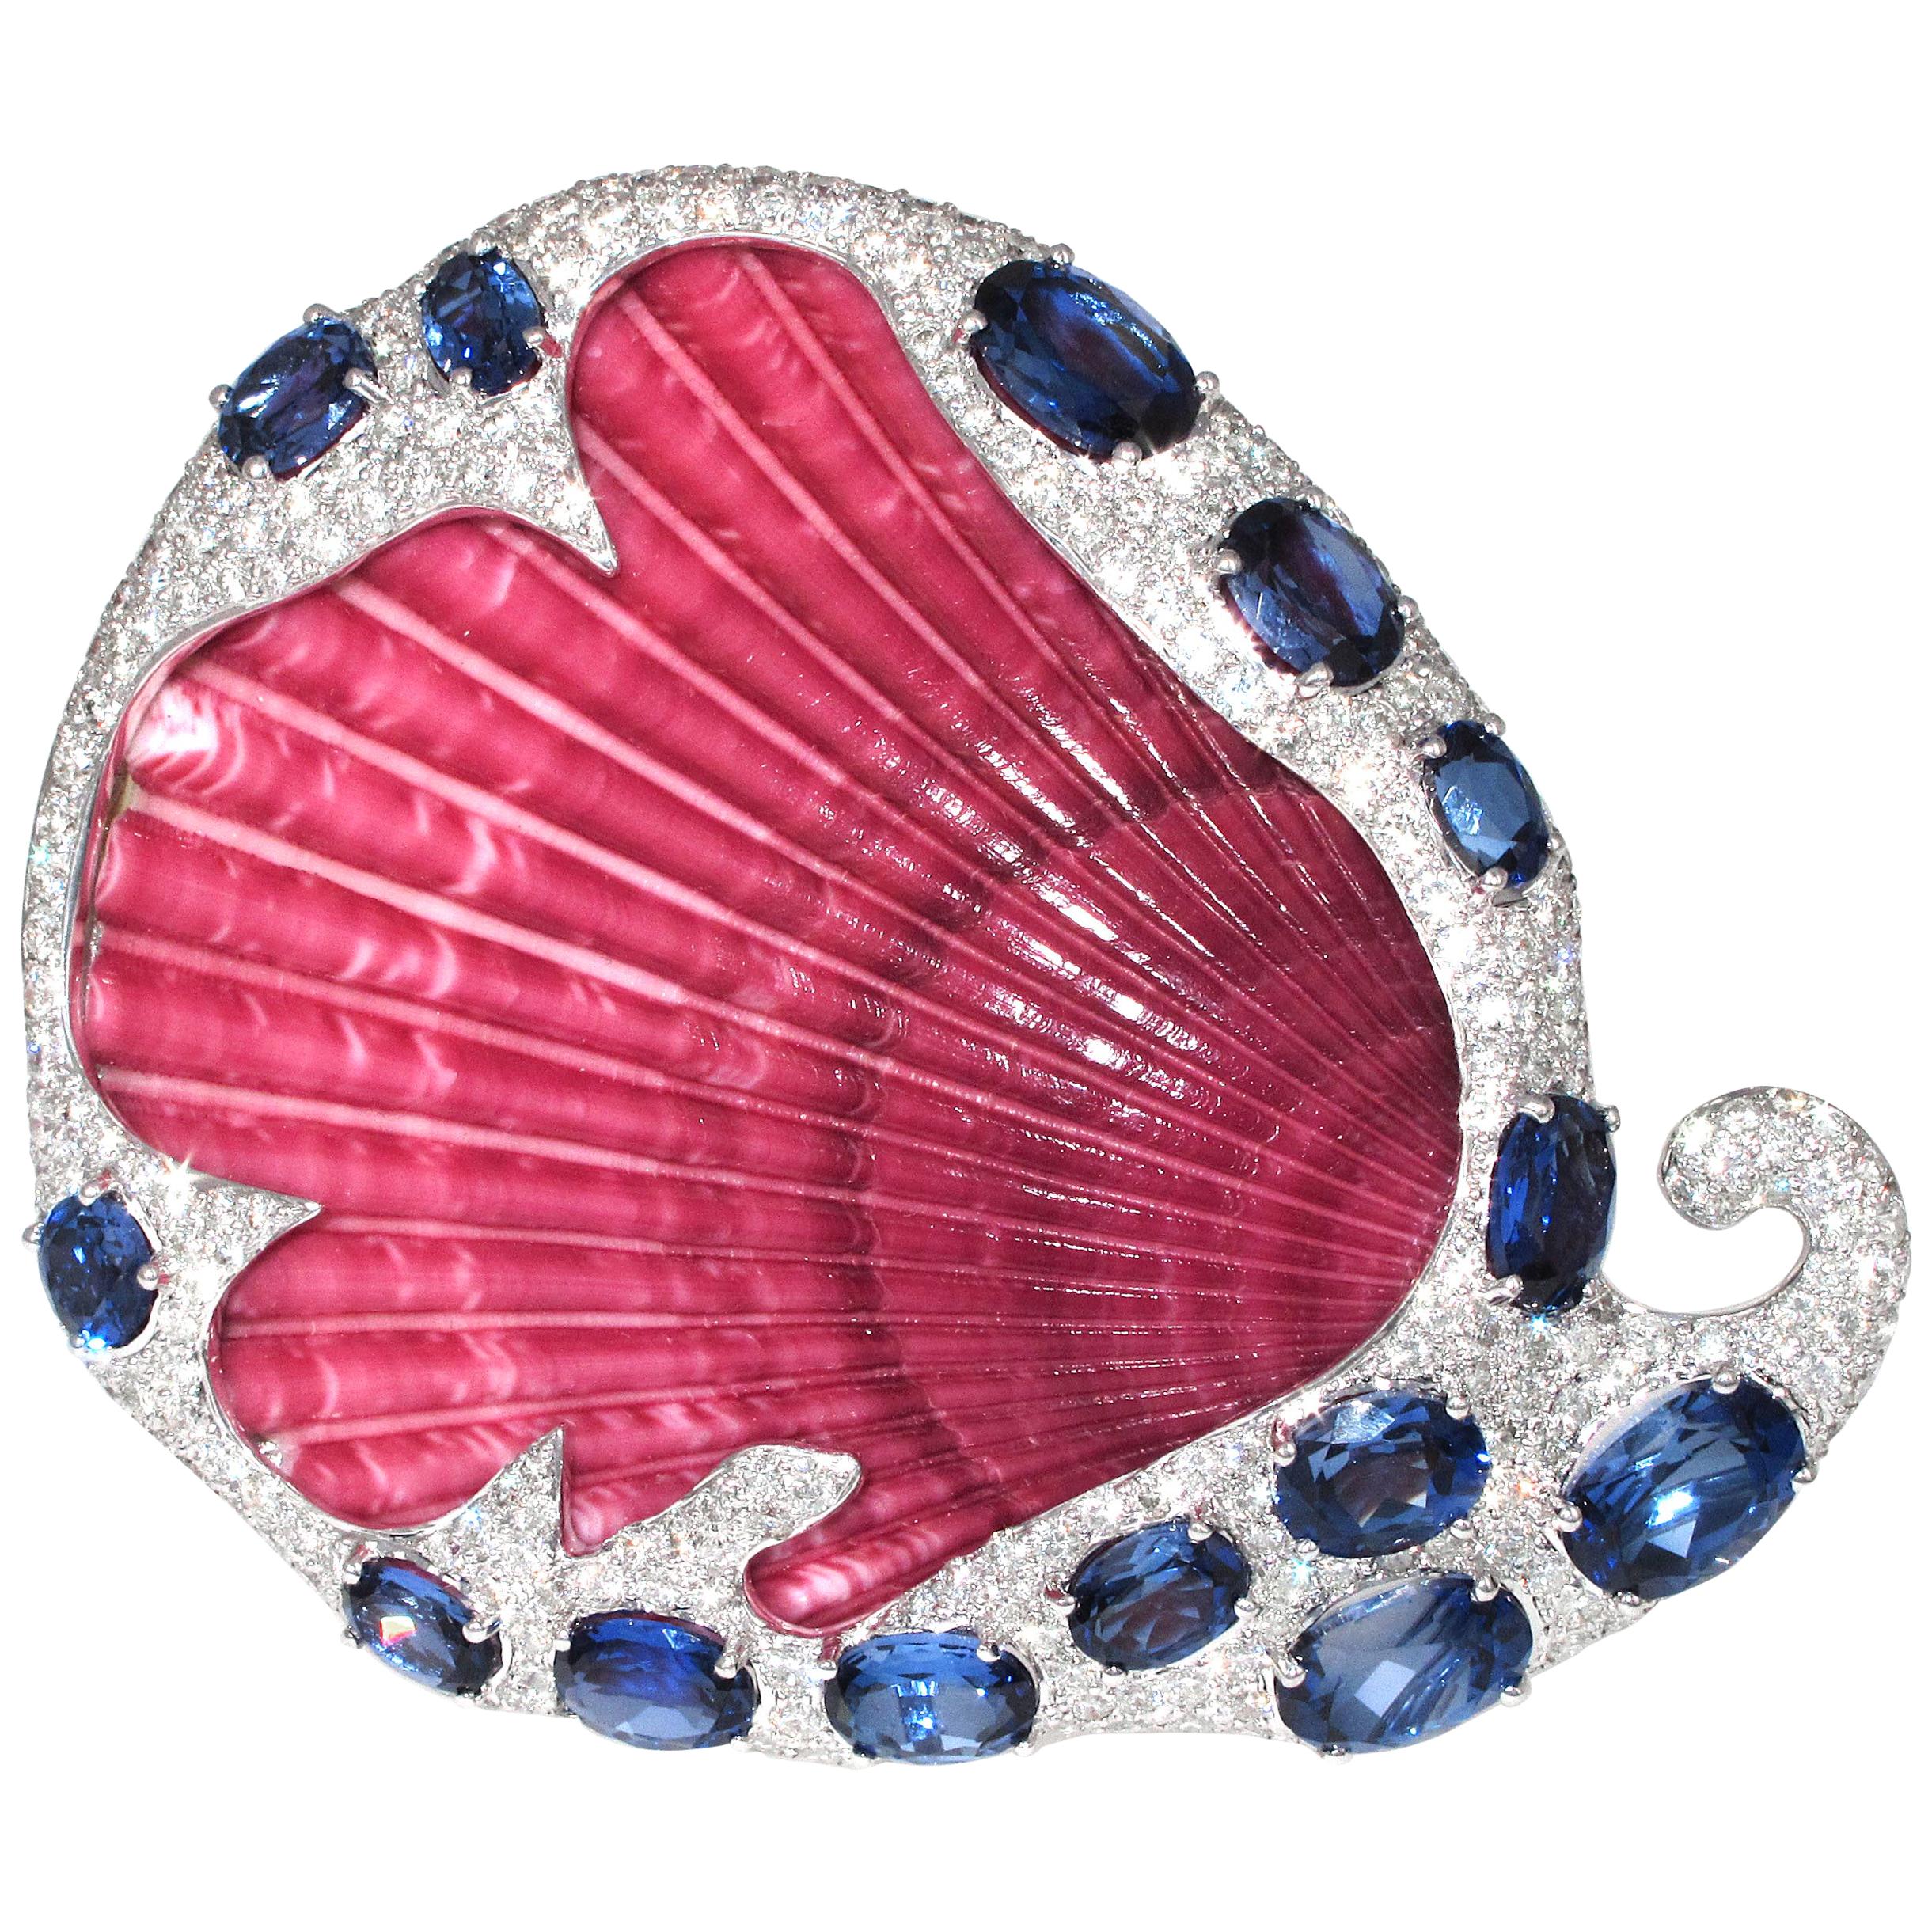 Unique Diamond and Blue Quart Shell Brooch Pin